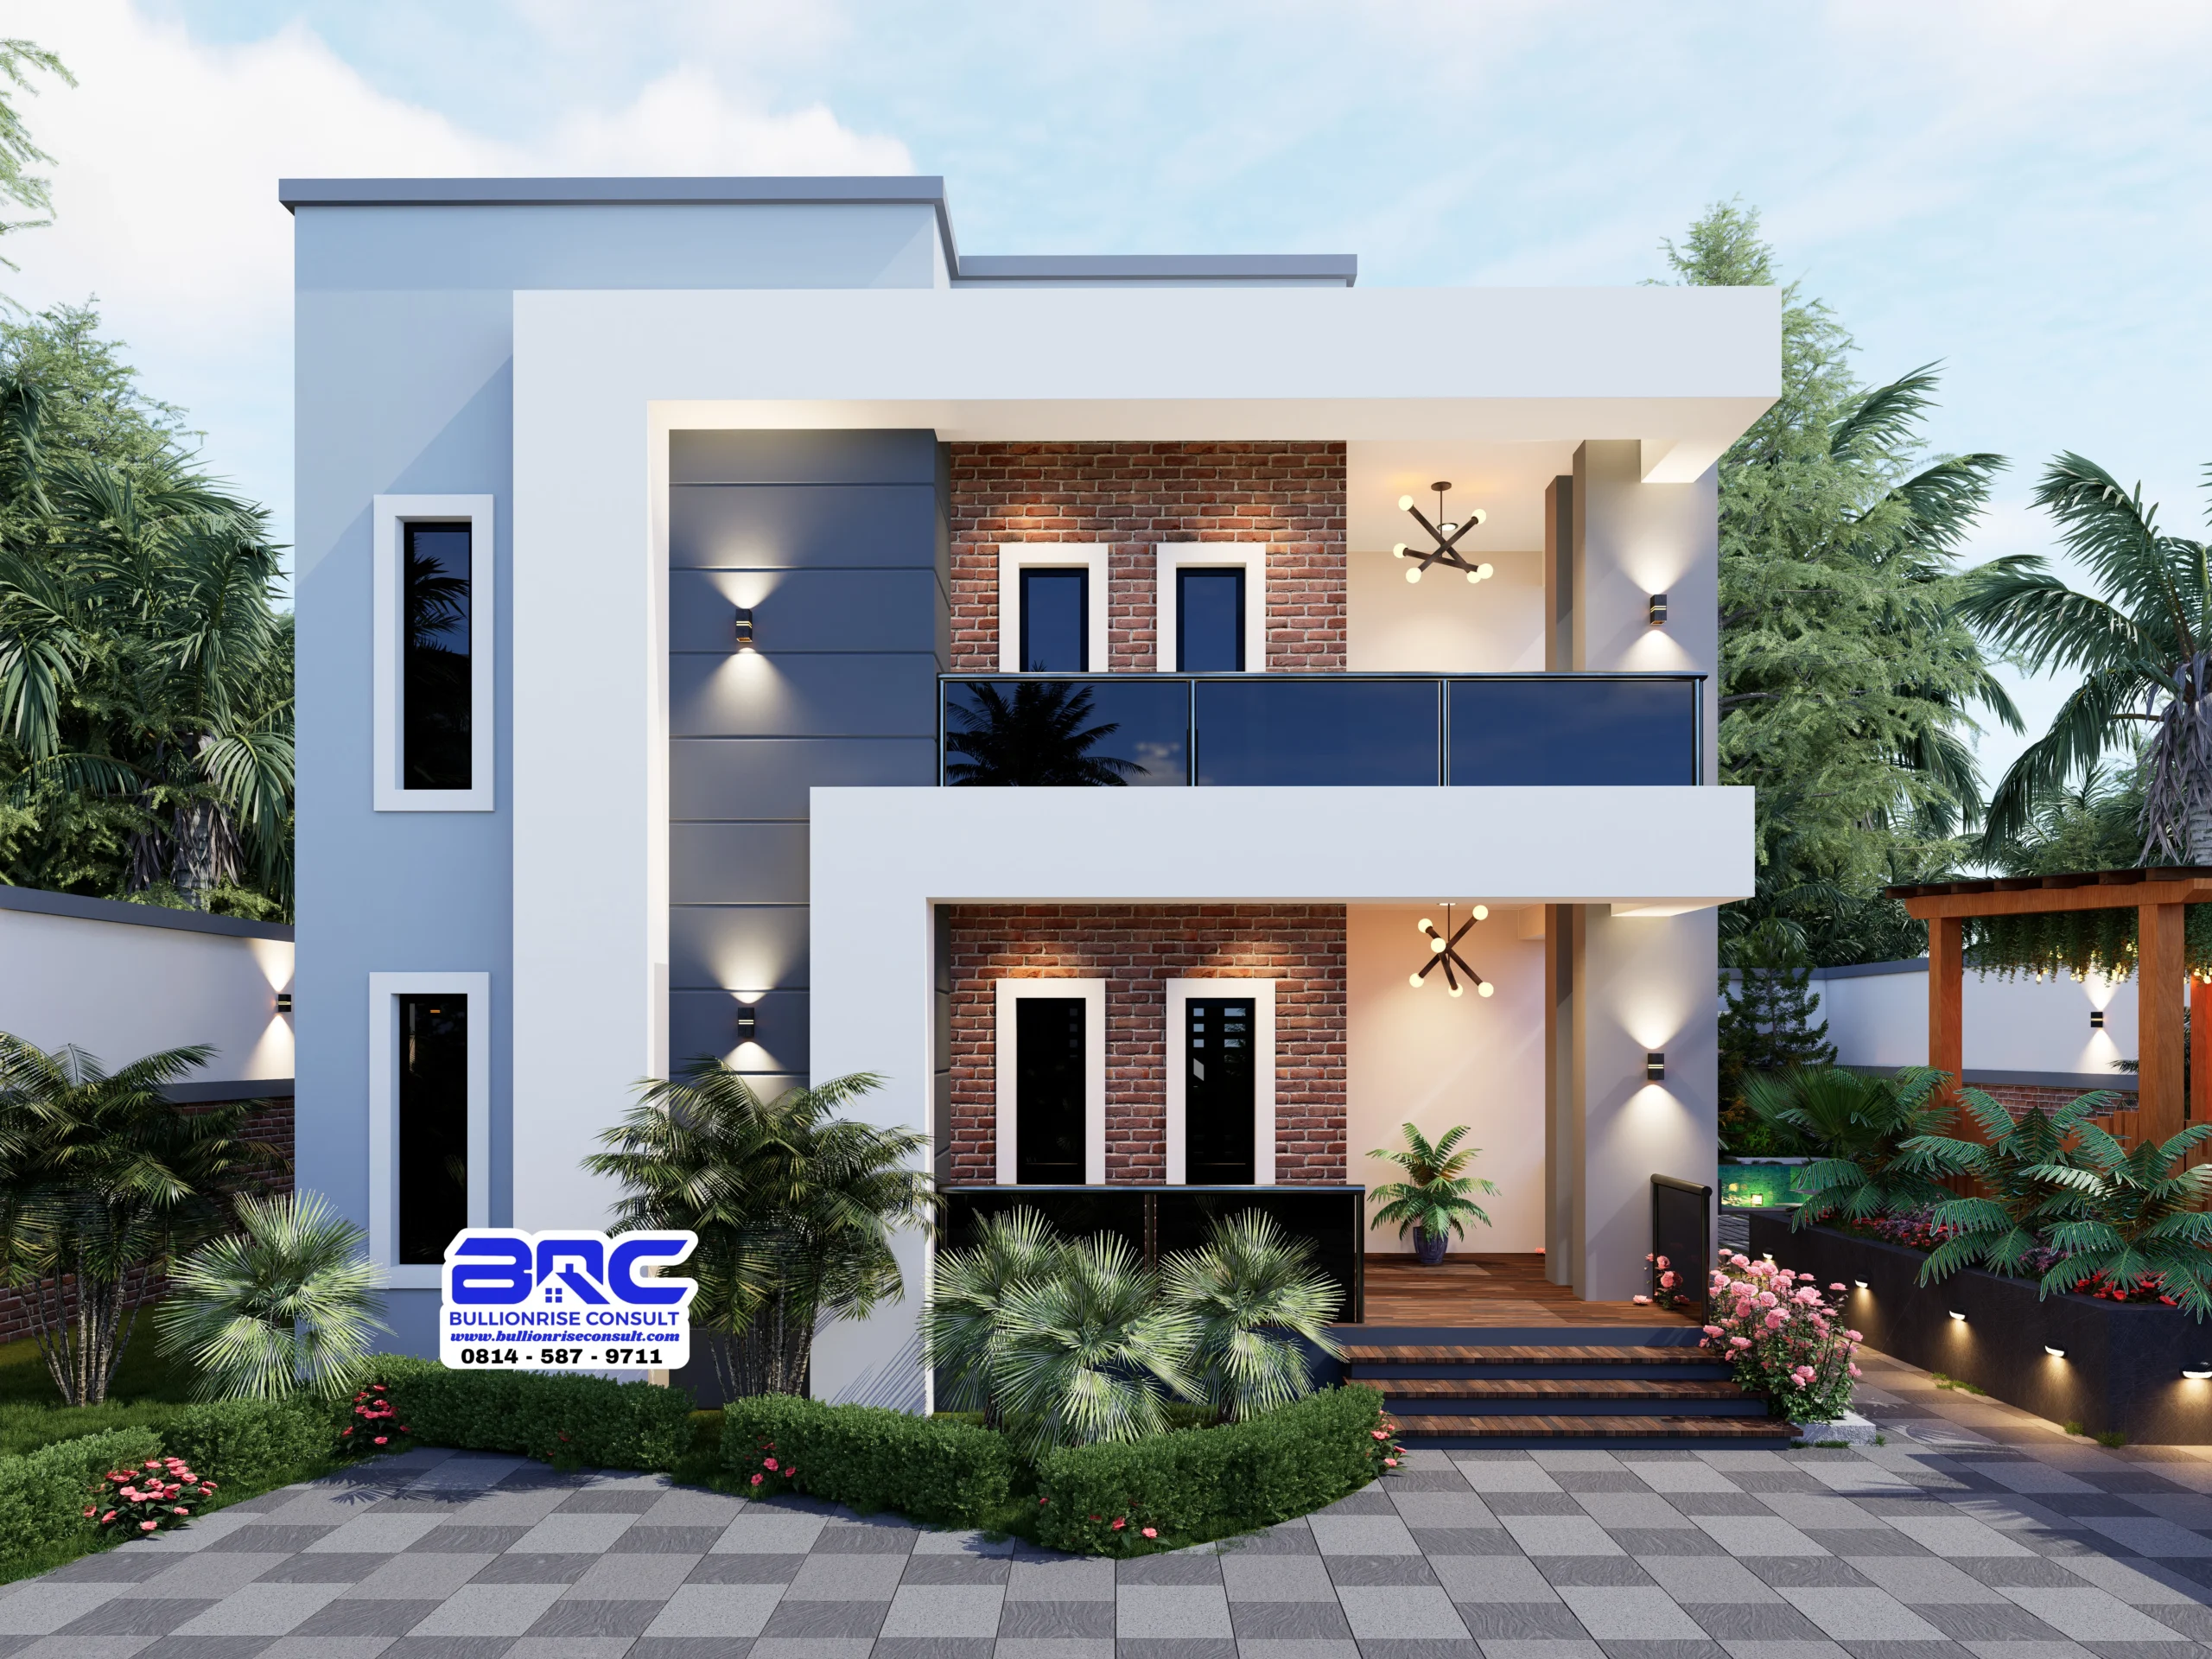 5 bedroom duplex house plan design in nigeria by bullionrise consult